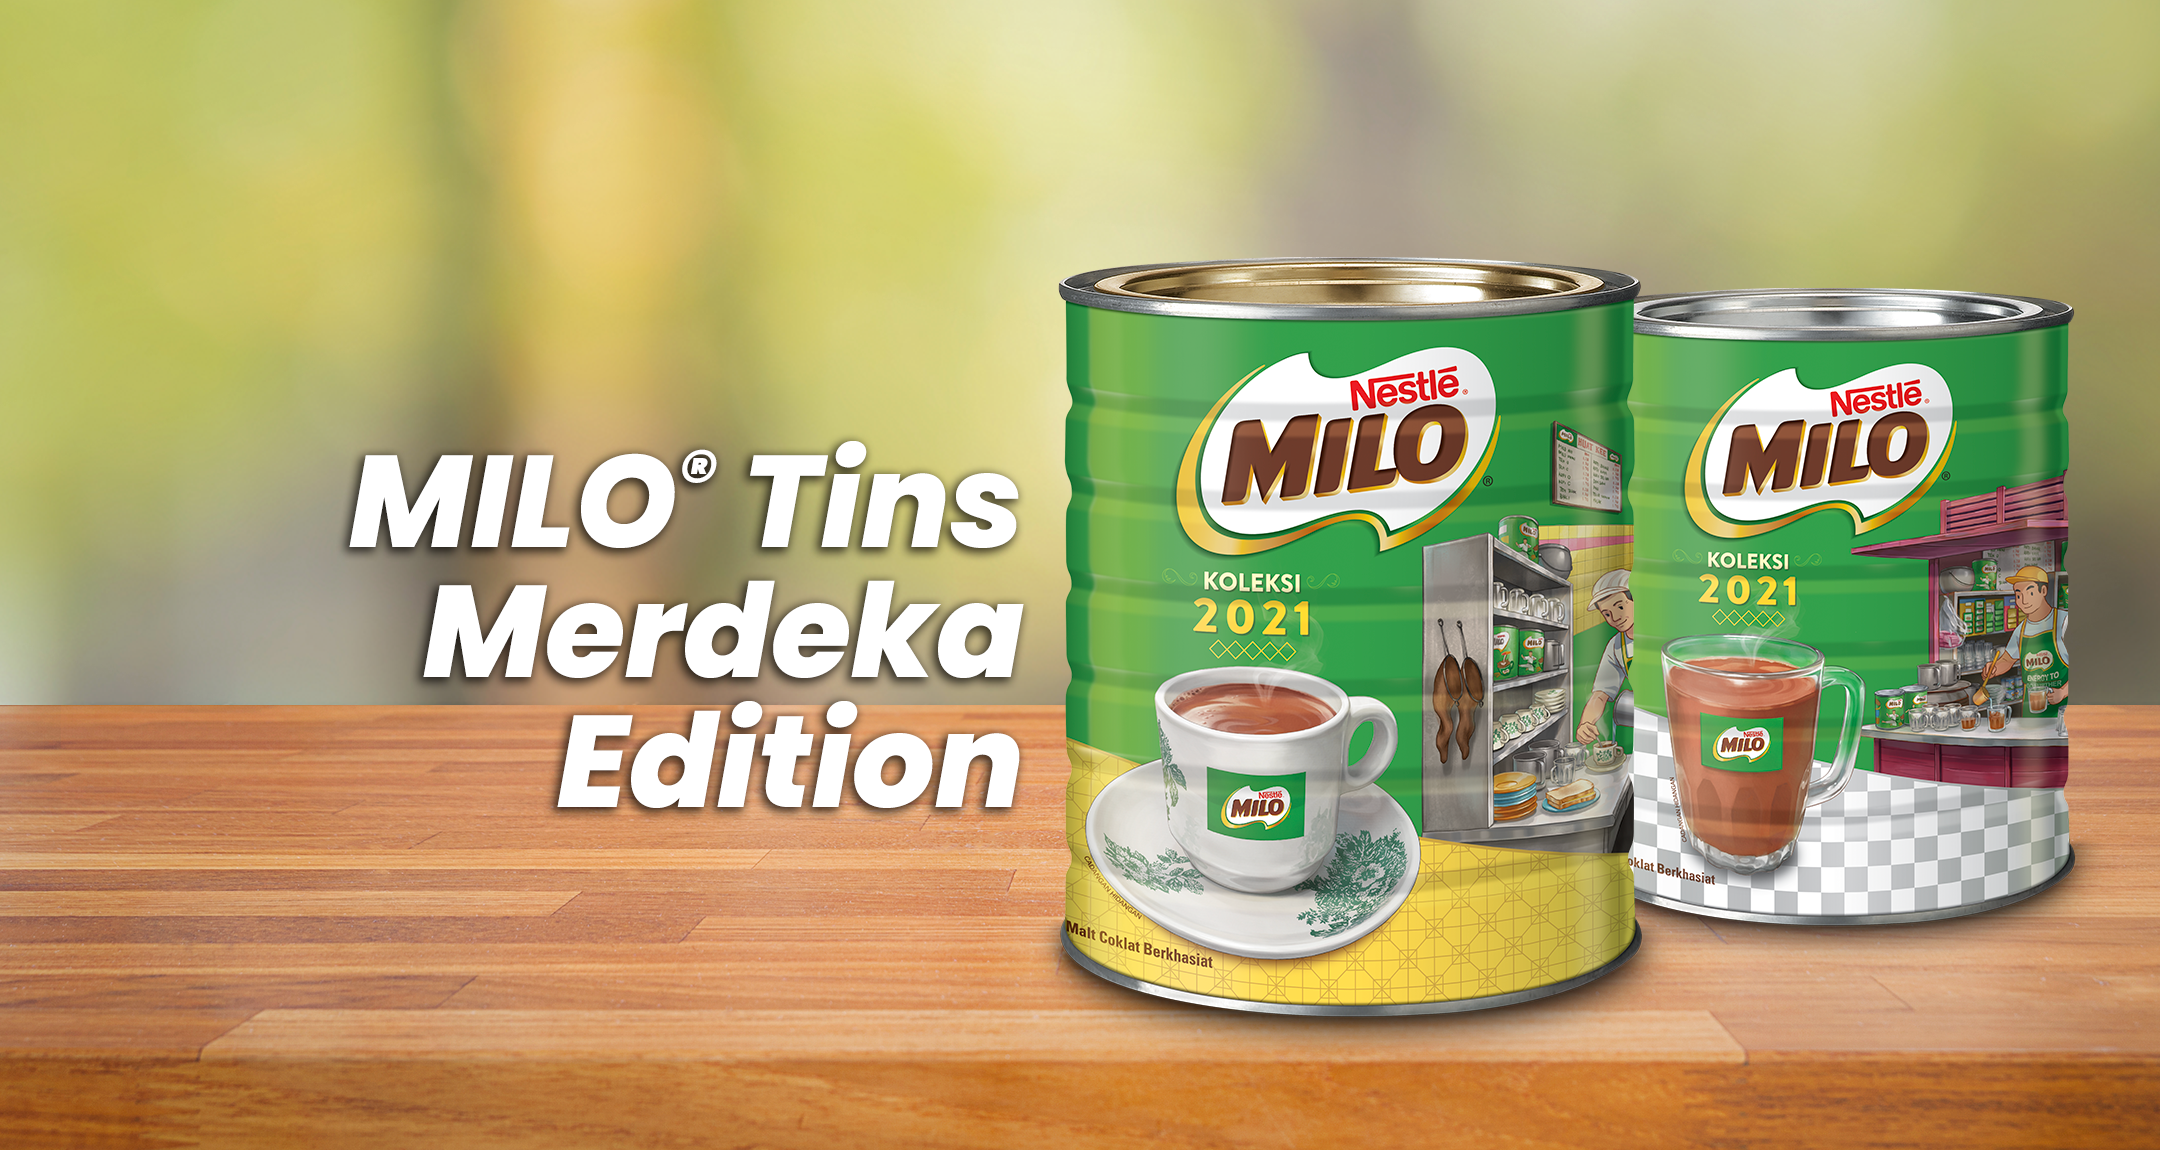 MILO Tins Merdeka Edition